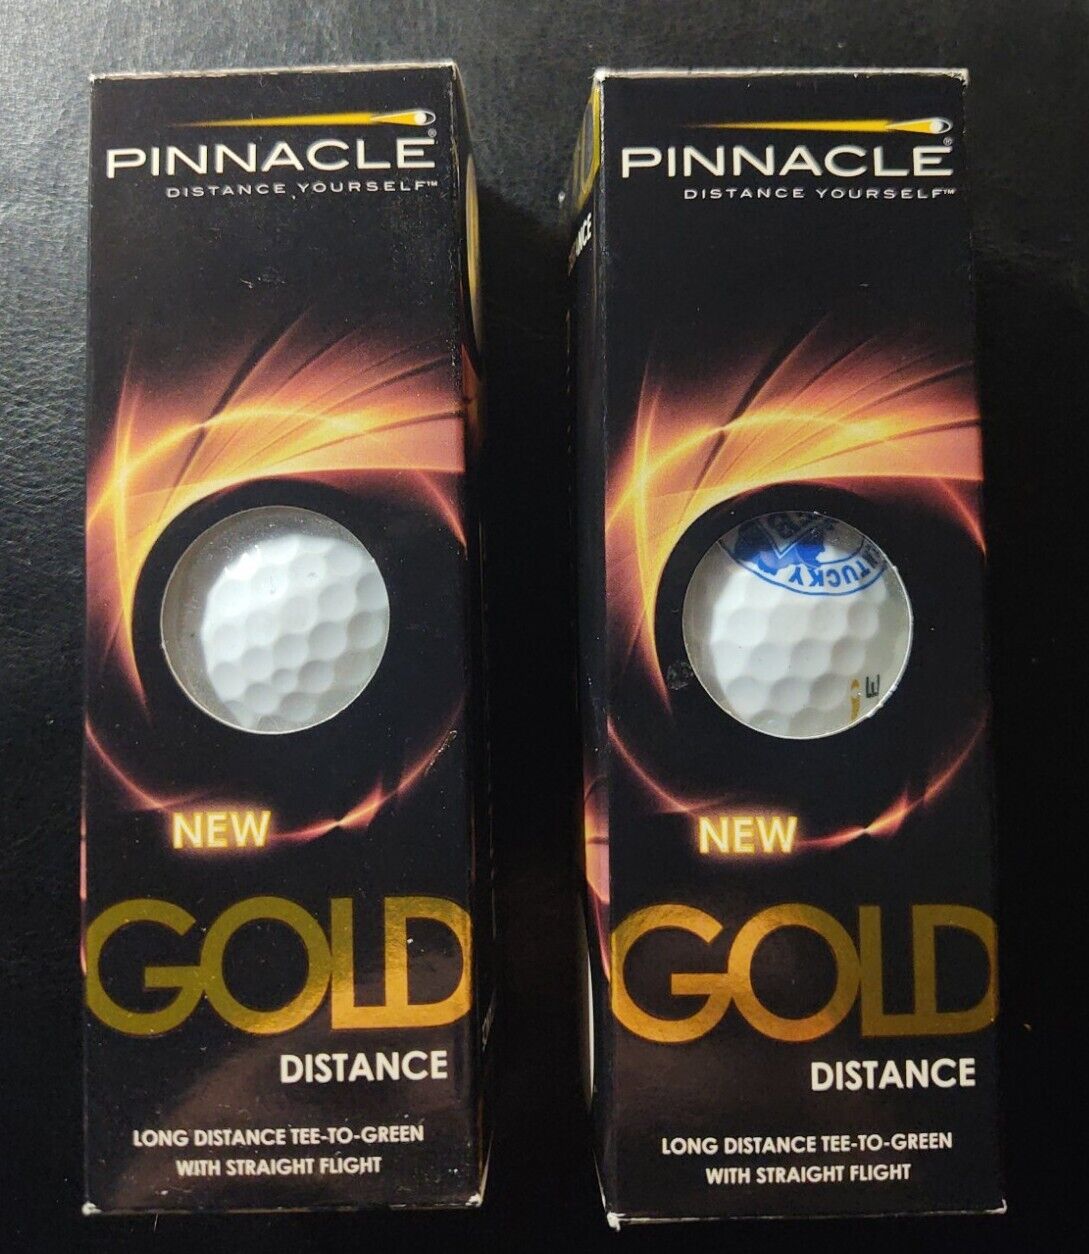 Kentucky Farm Bureau logo balls - Pinnacle Gold Distance - New Sleeve (Lot of 2)